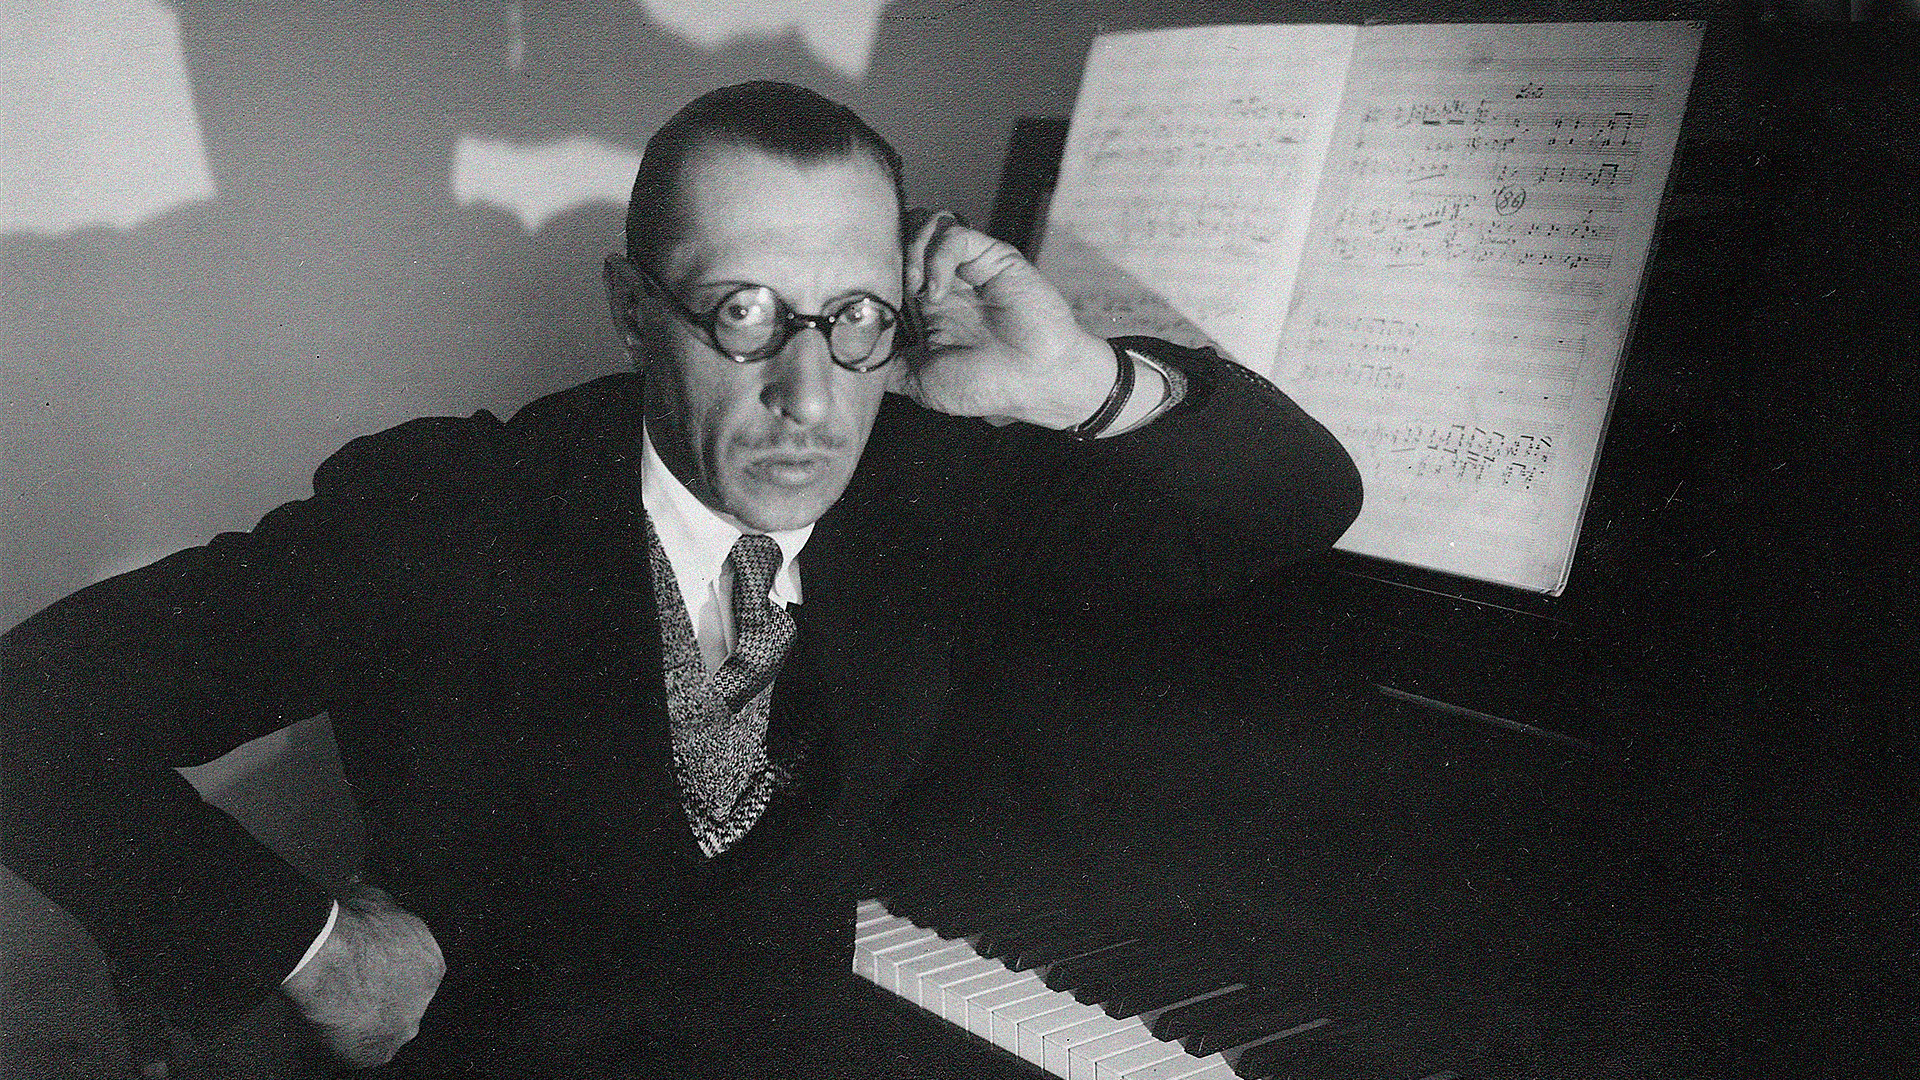 Igor Stravinsky: An Analytical Study of Programmatic Design of His